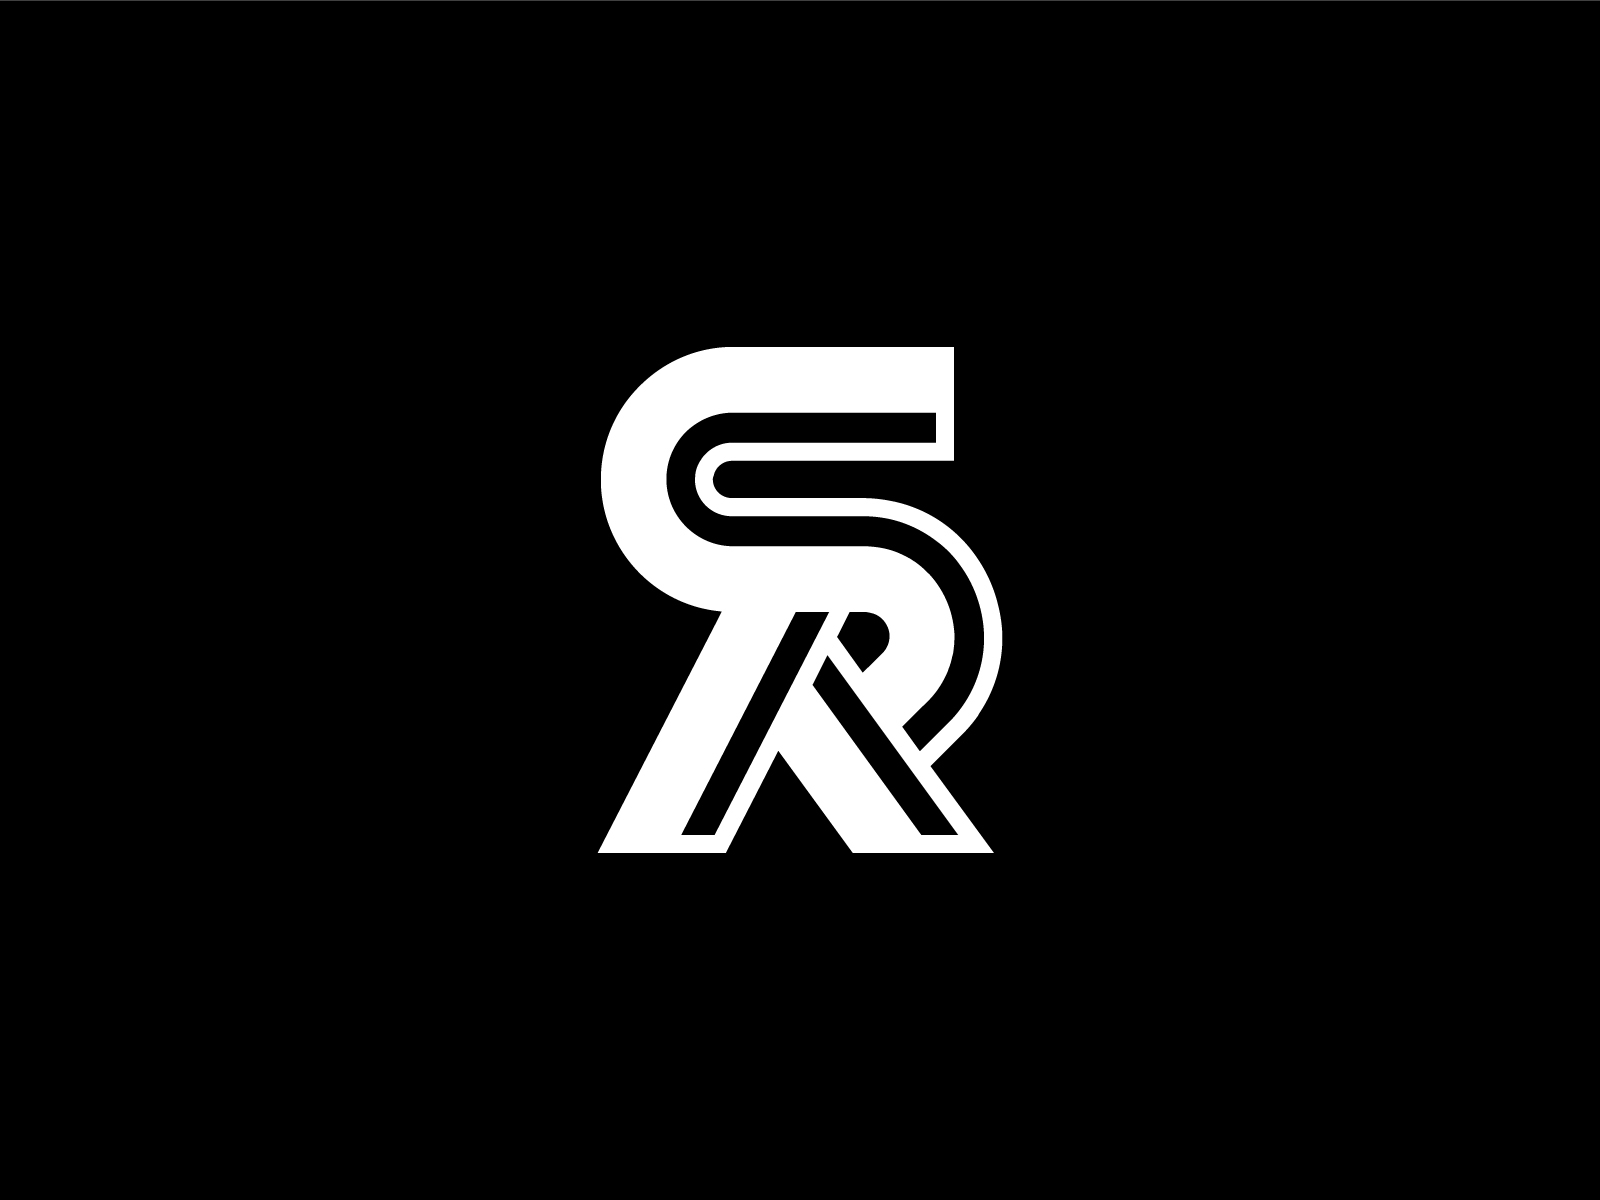 Initial letter rs king design logo concept Vector Image